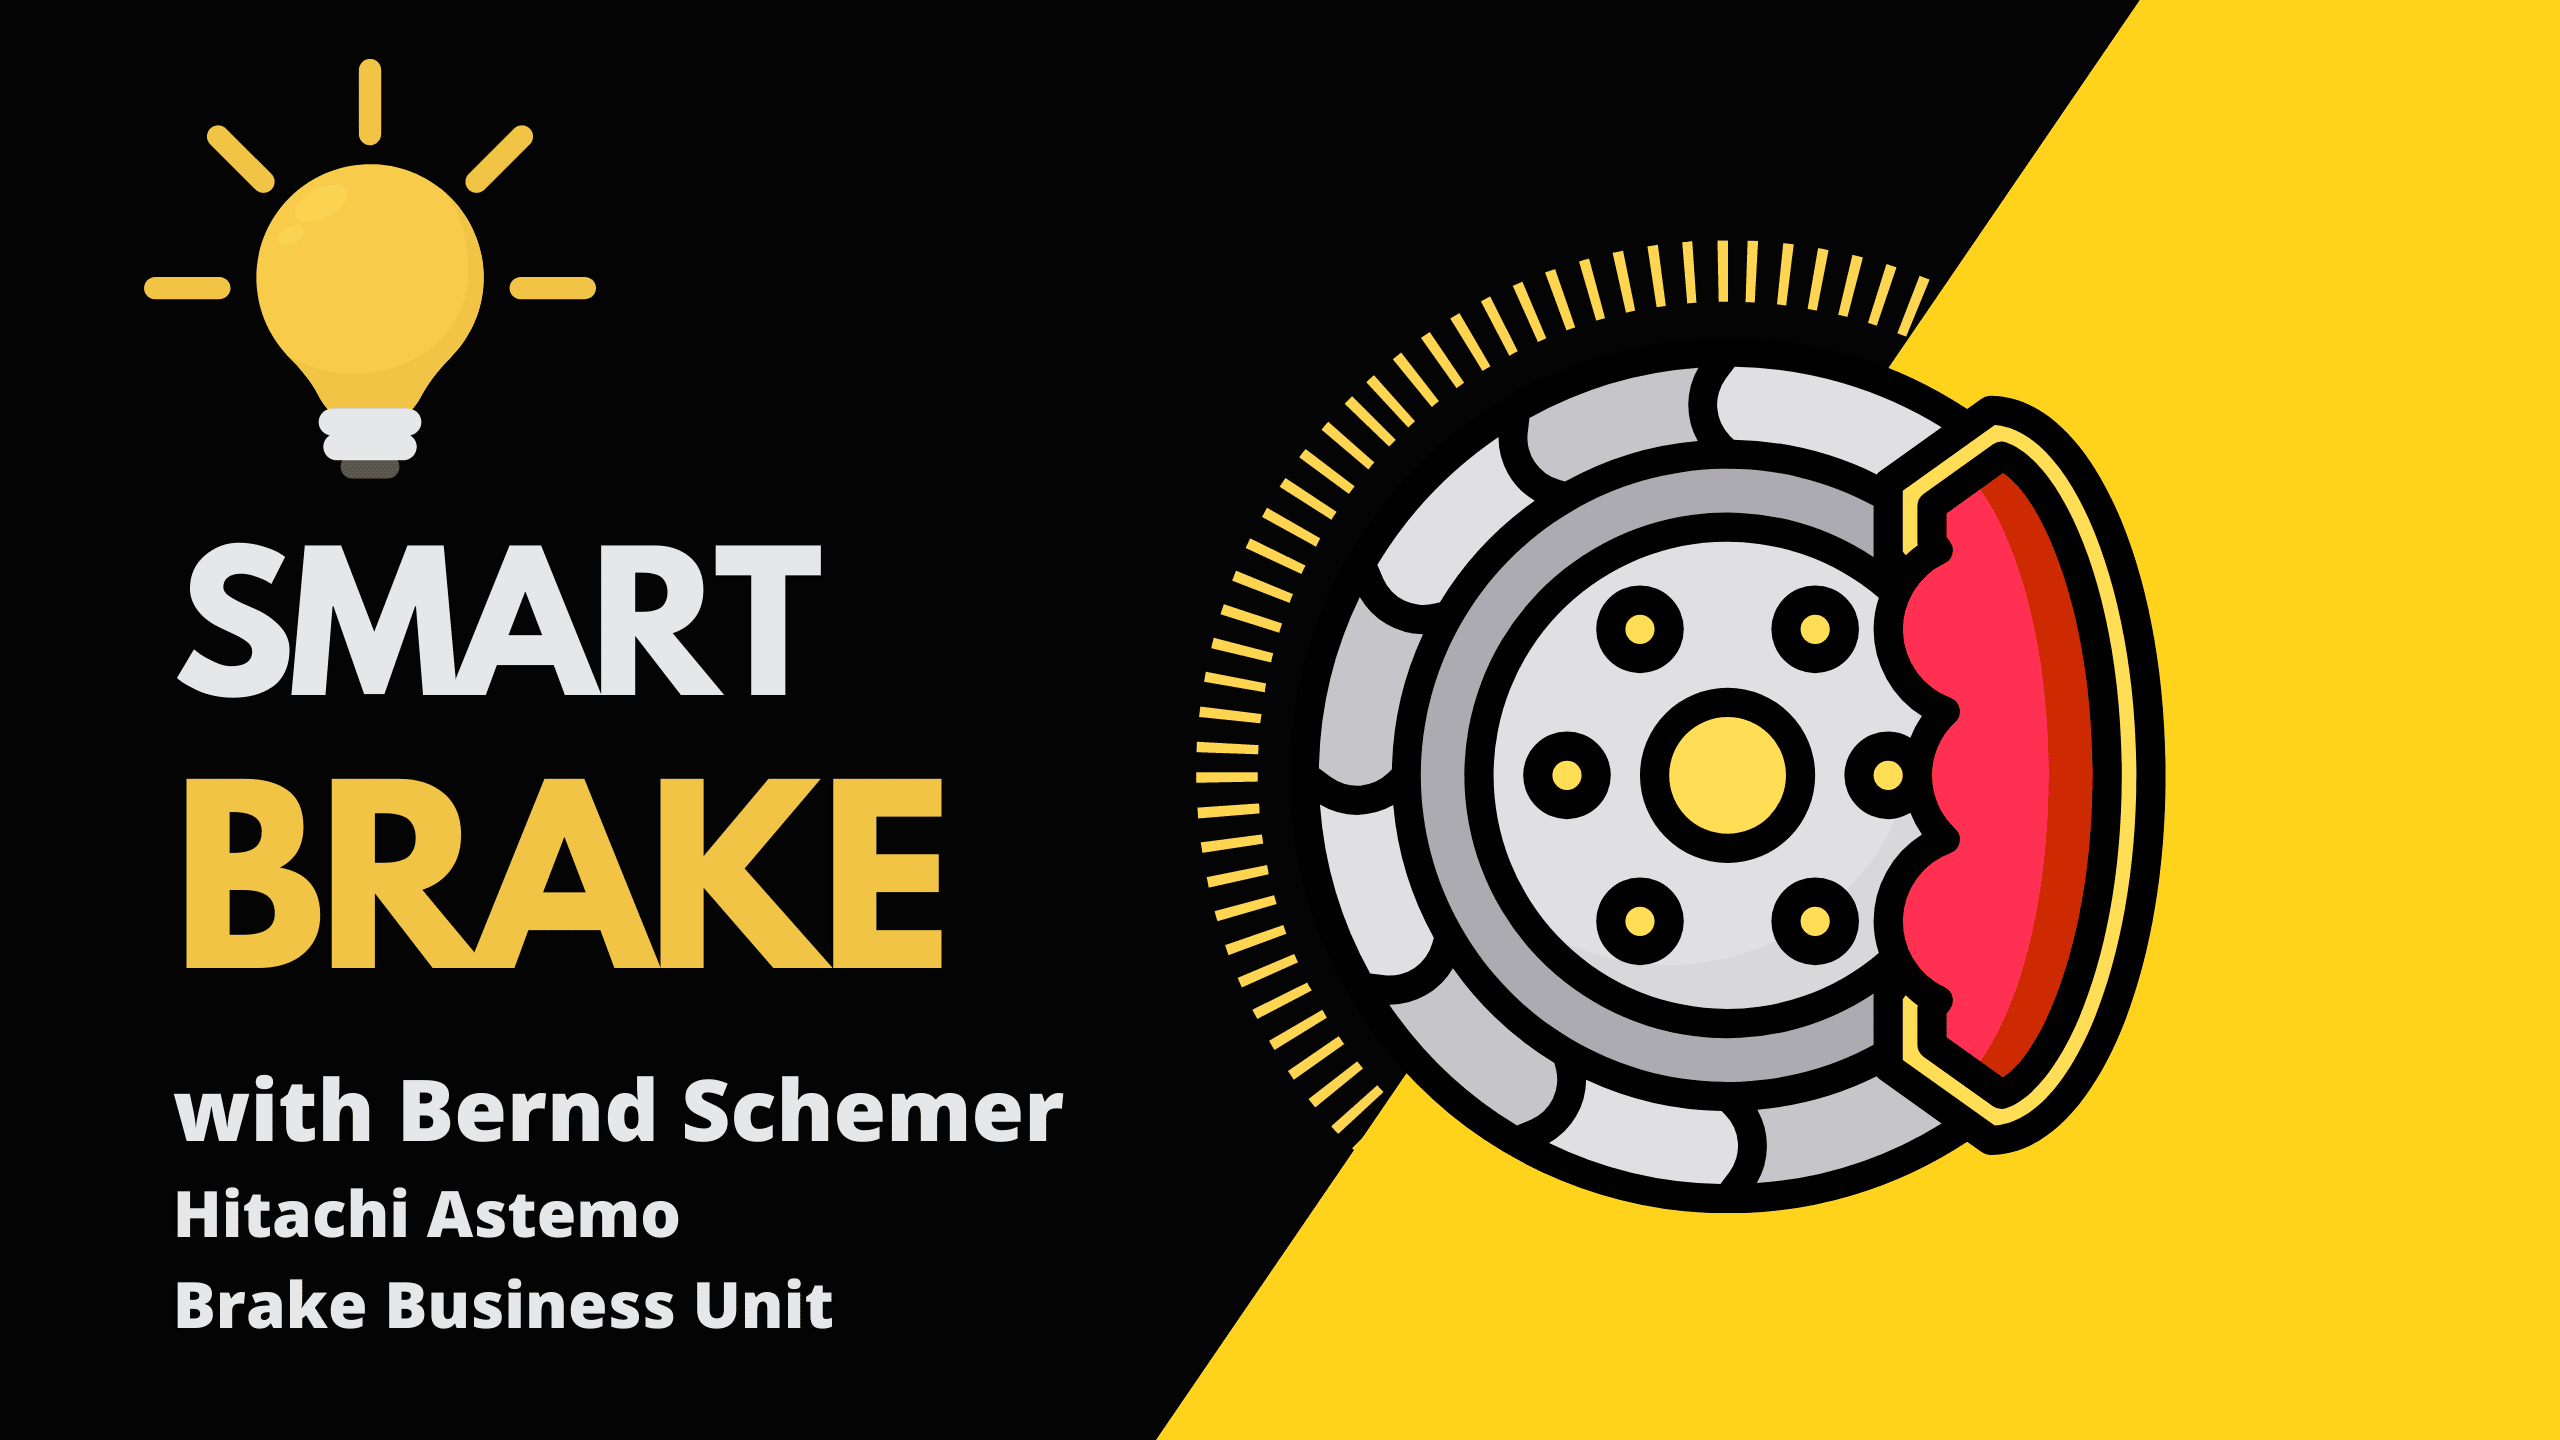 Smart Brake - Hitachi Astemo - Bernd Schemer